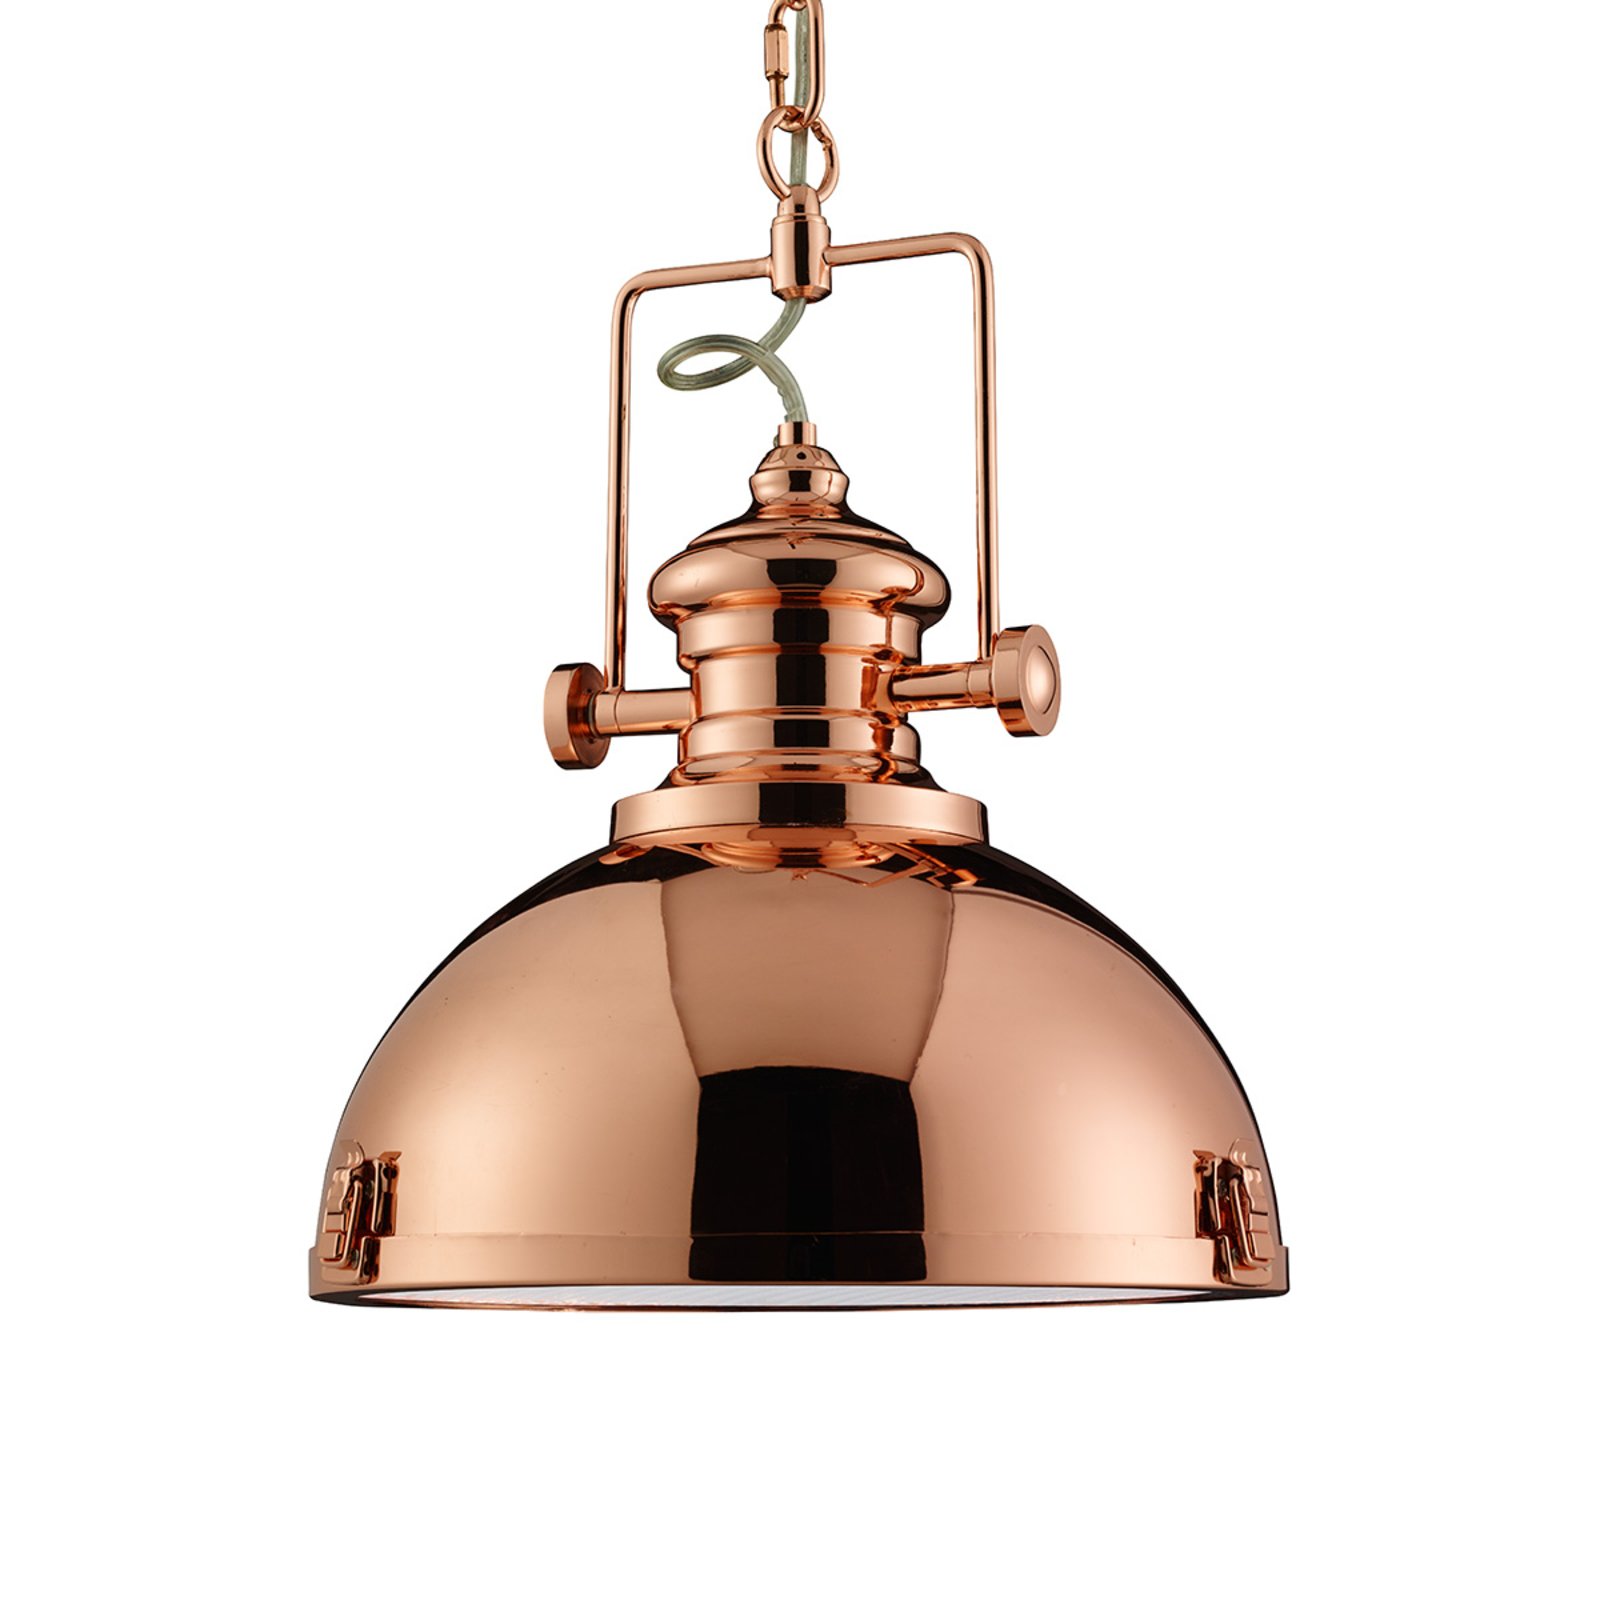 Metal pendant light, industrial design, copper-coloured